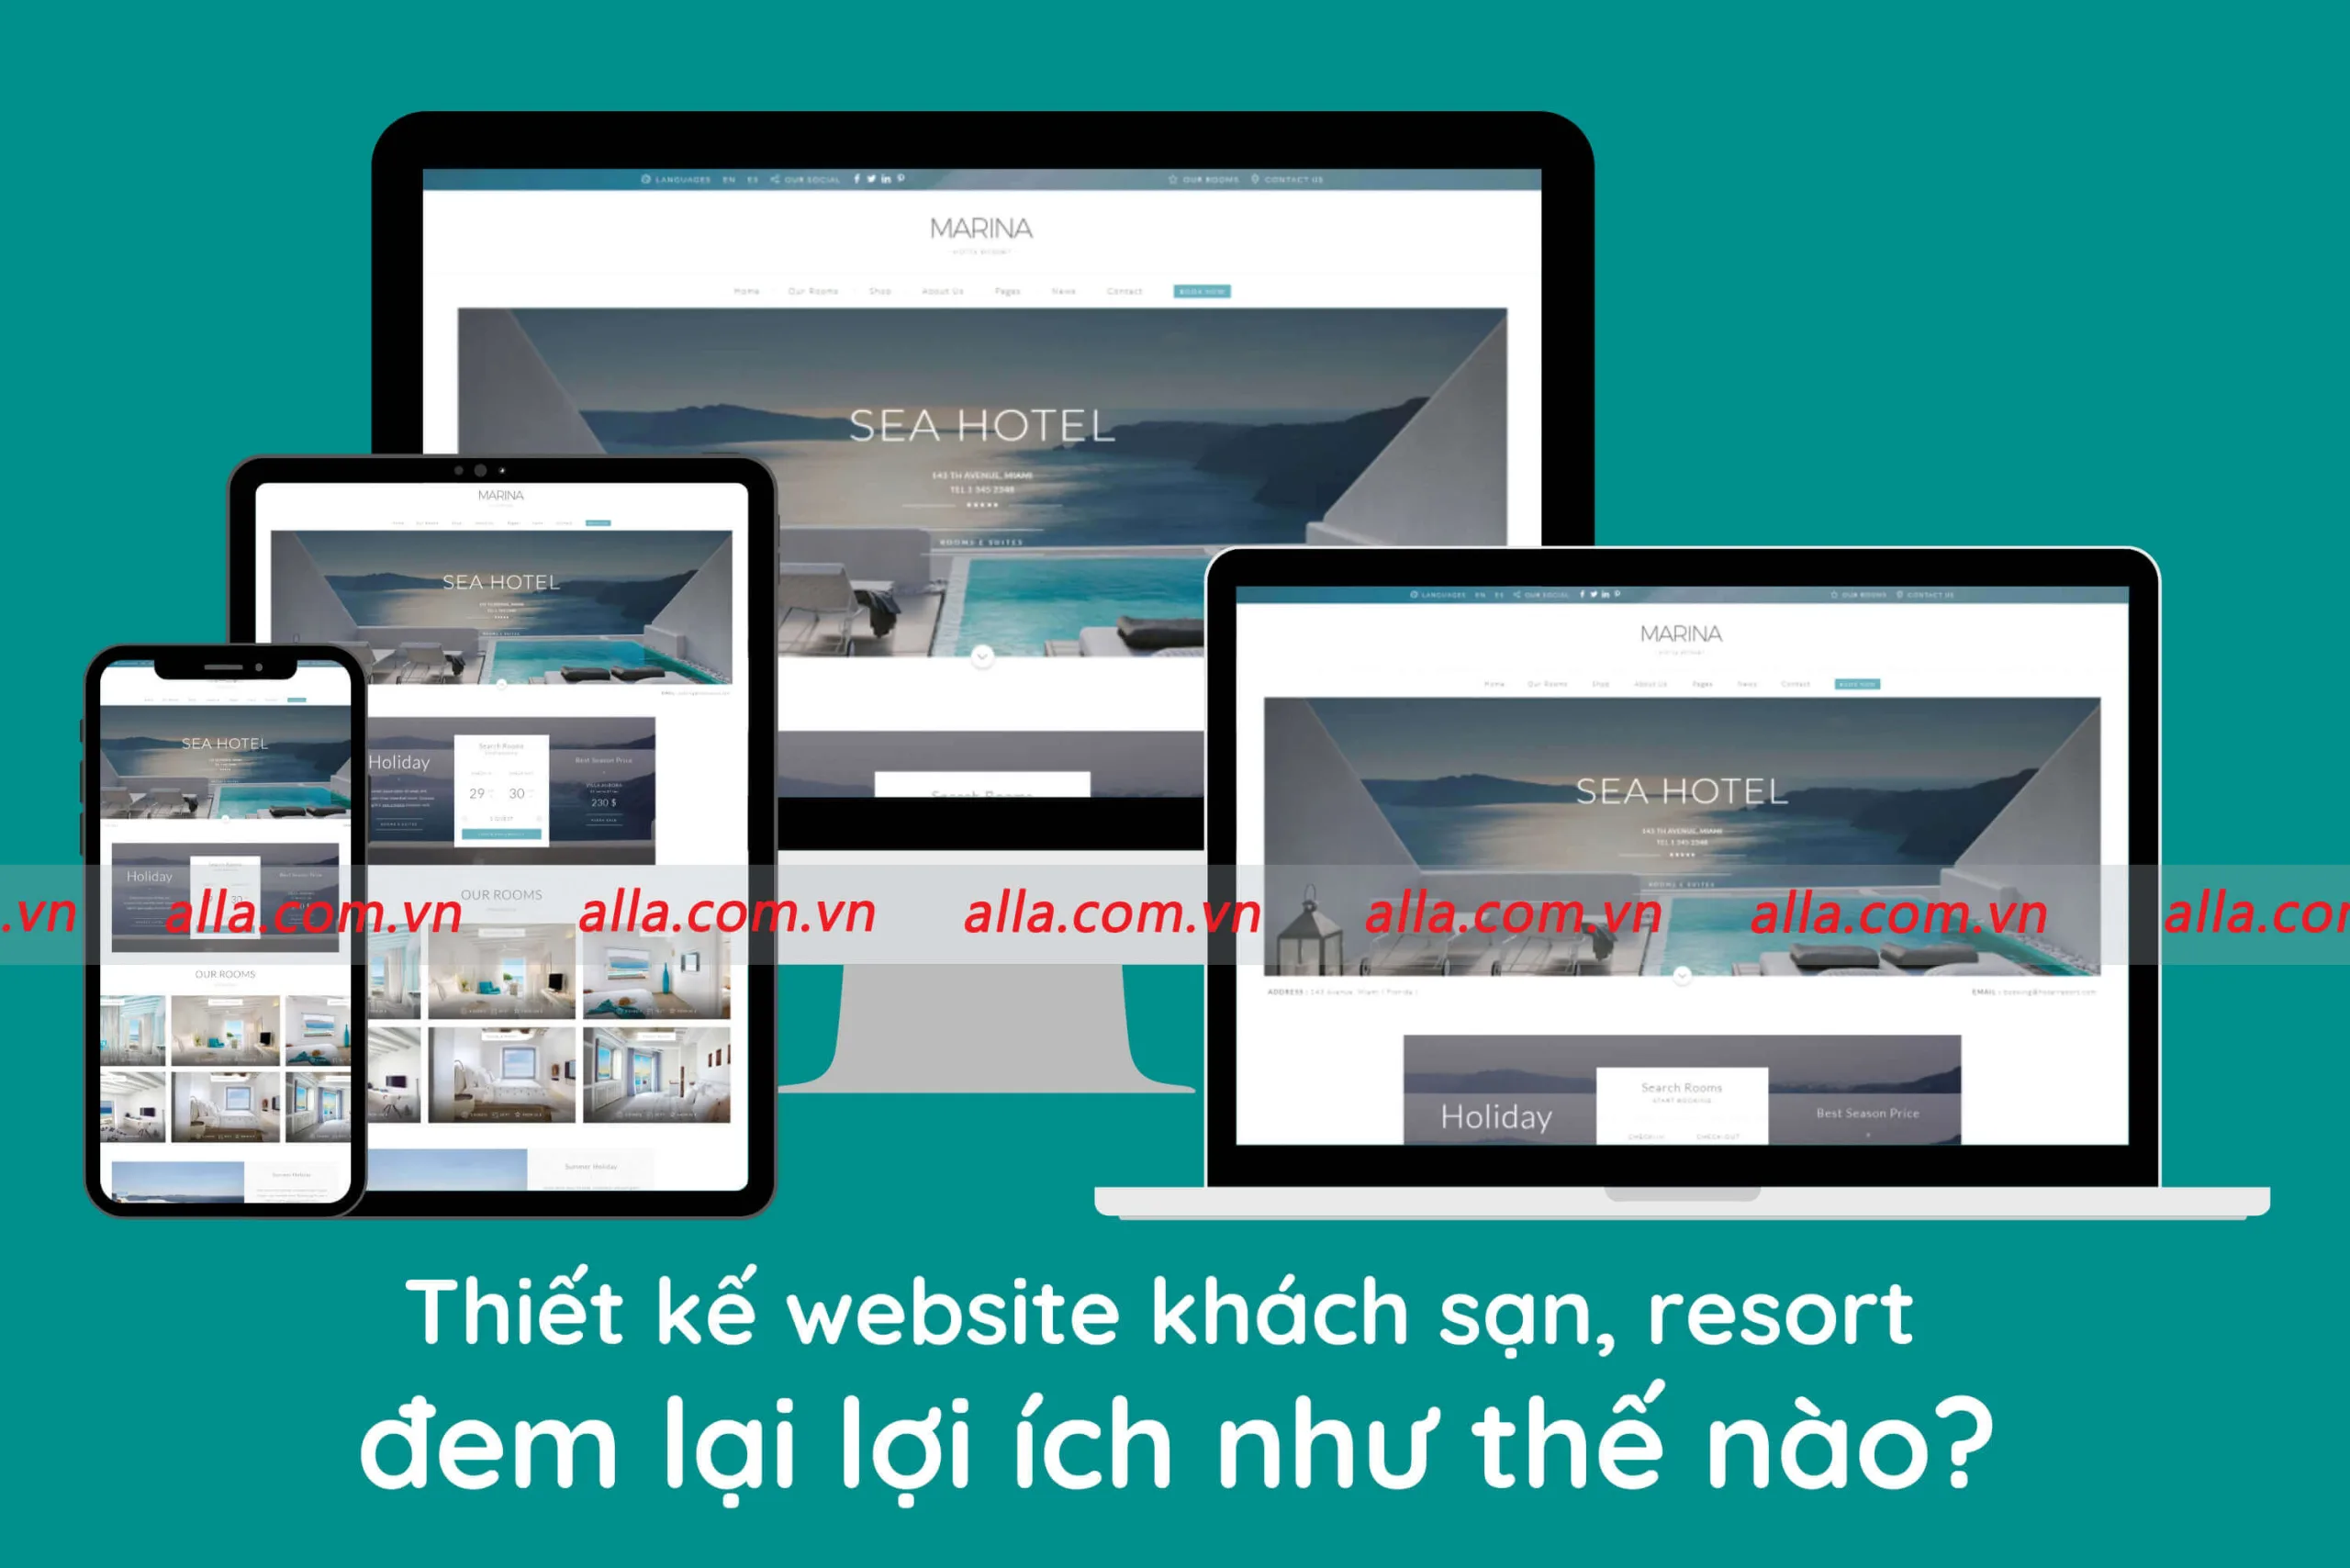 thiet-ke-website-khach-san-resort-co-loi-ich-nhu-the-nao